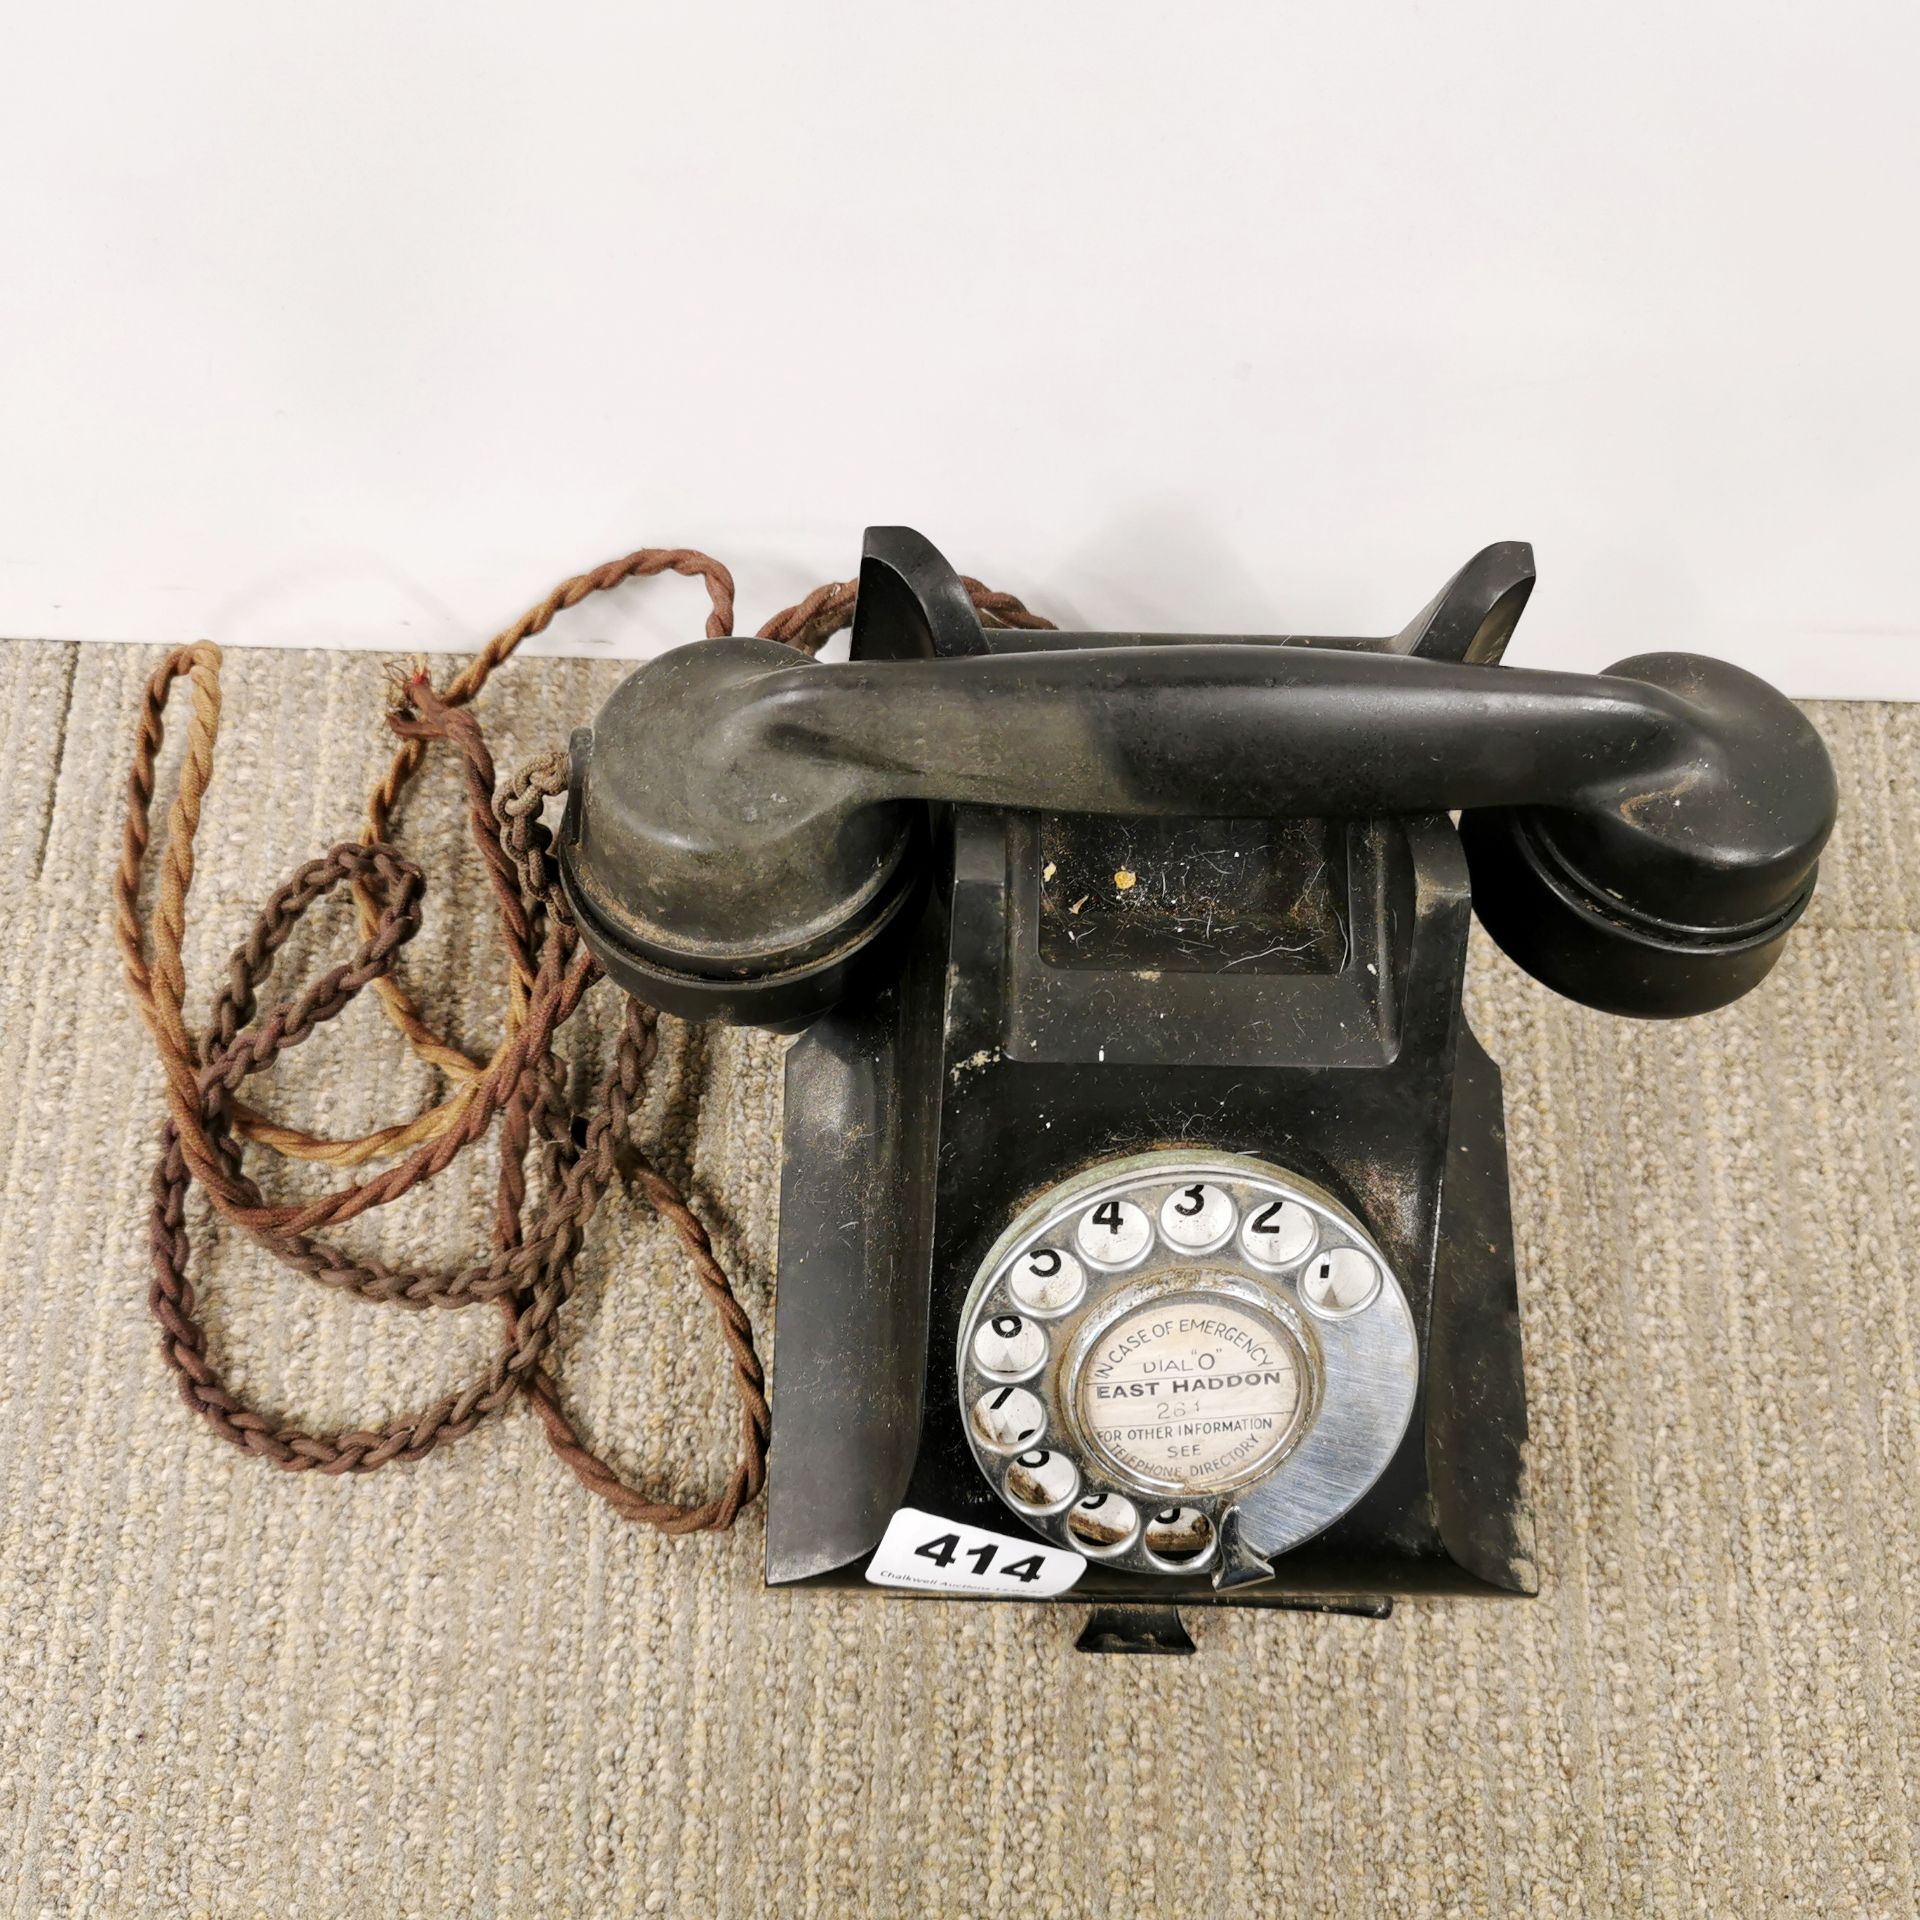 A black bakelite telephone. - Image 2 of 3